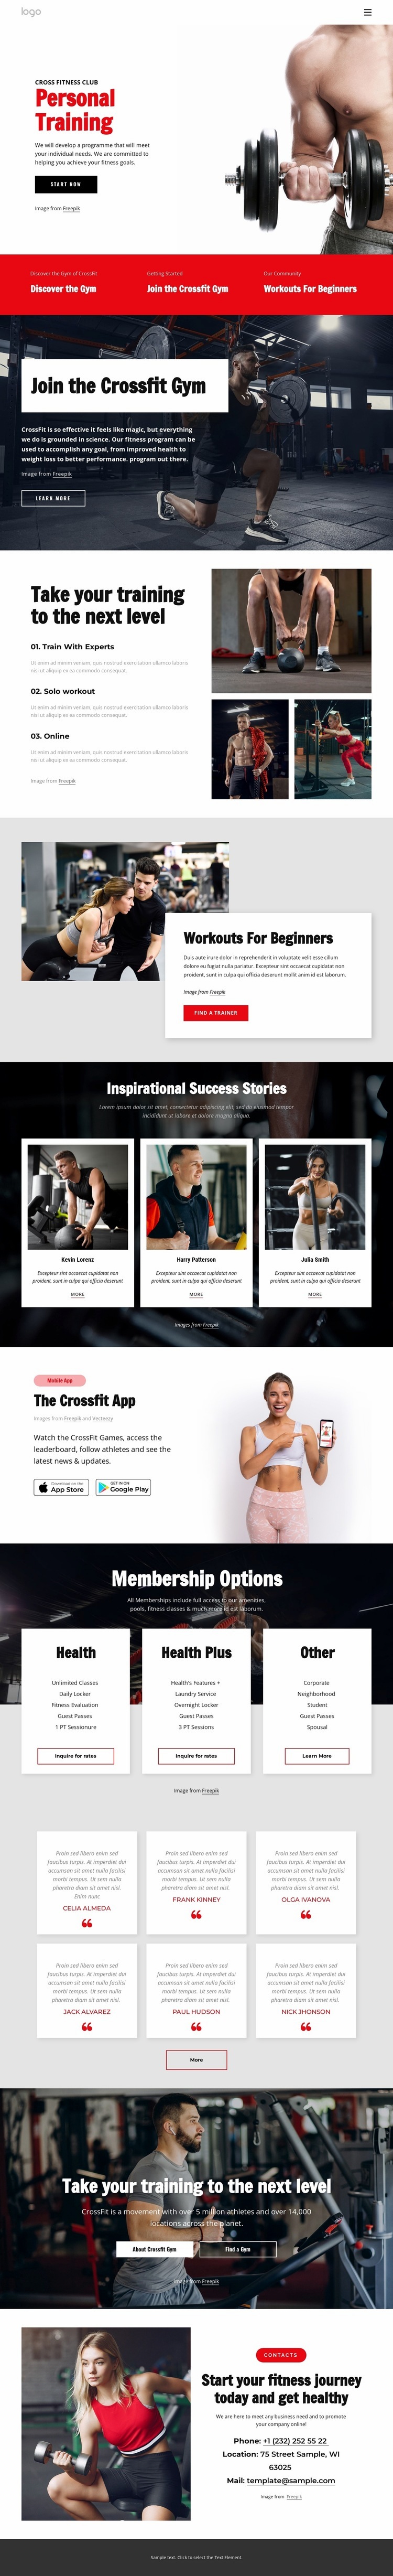 Cross fitness club Web Page Design